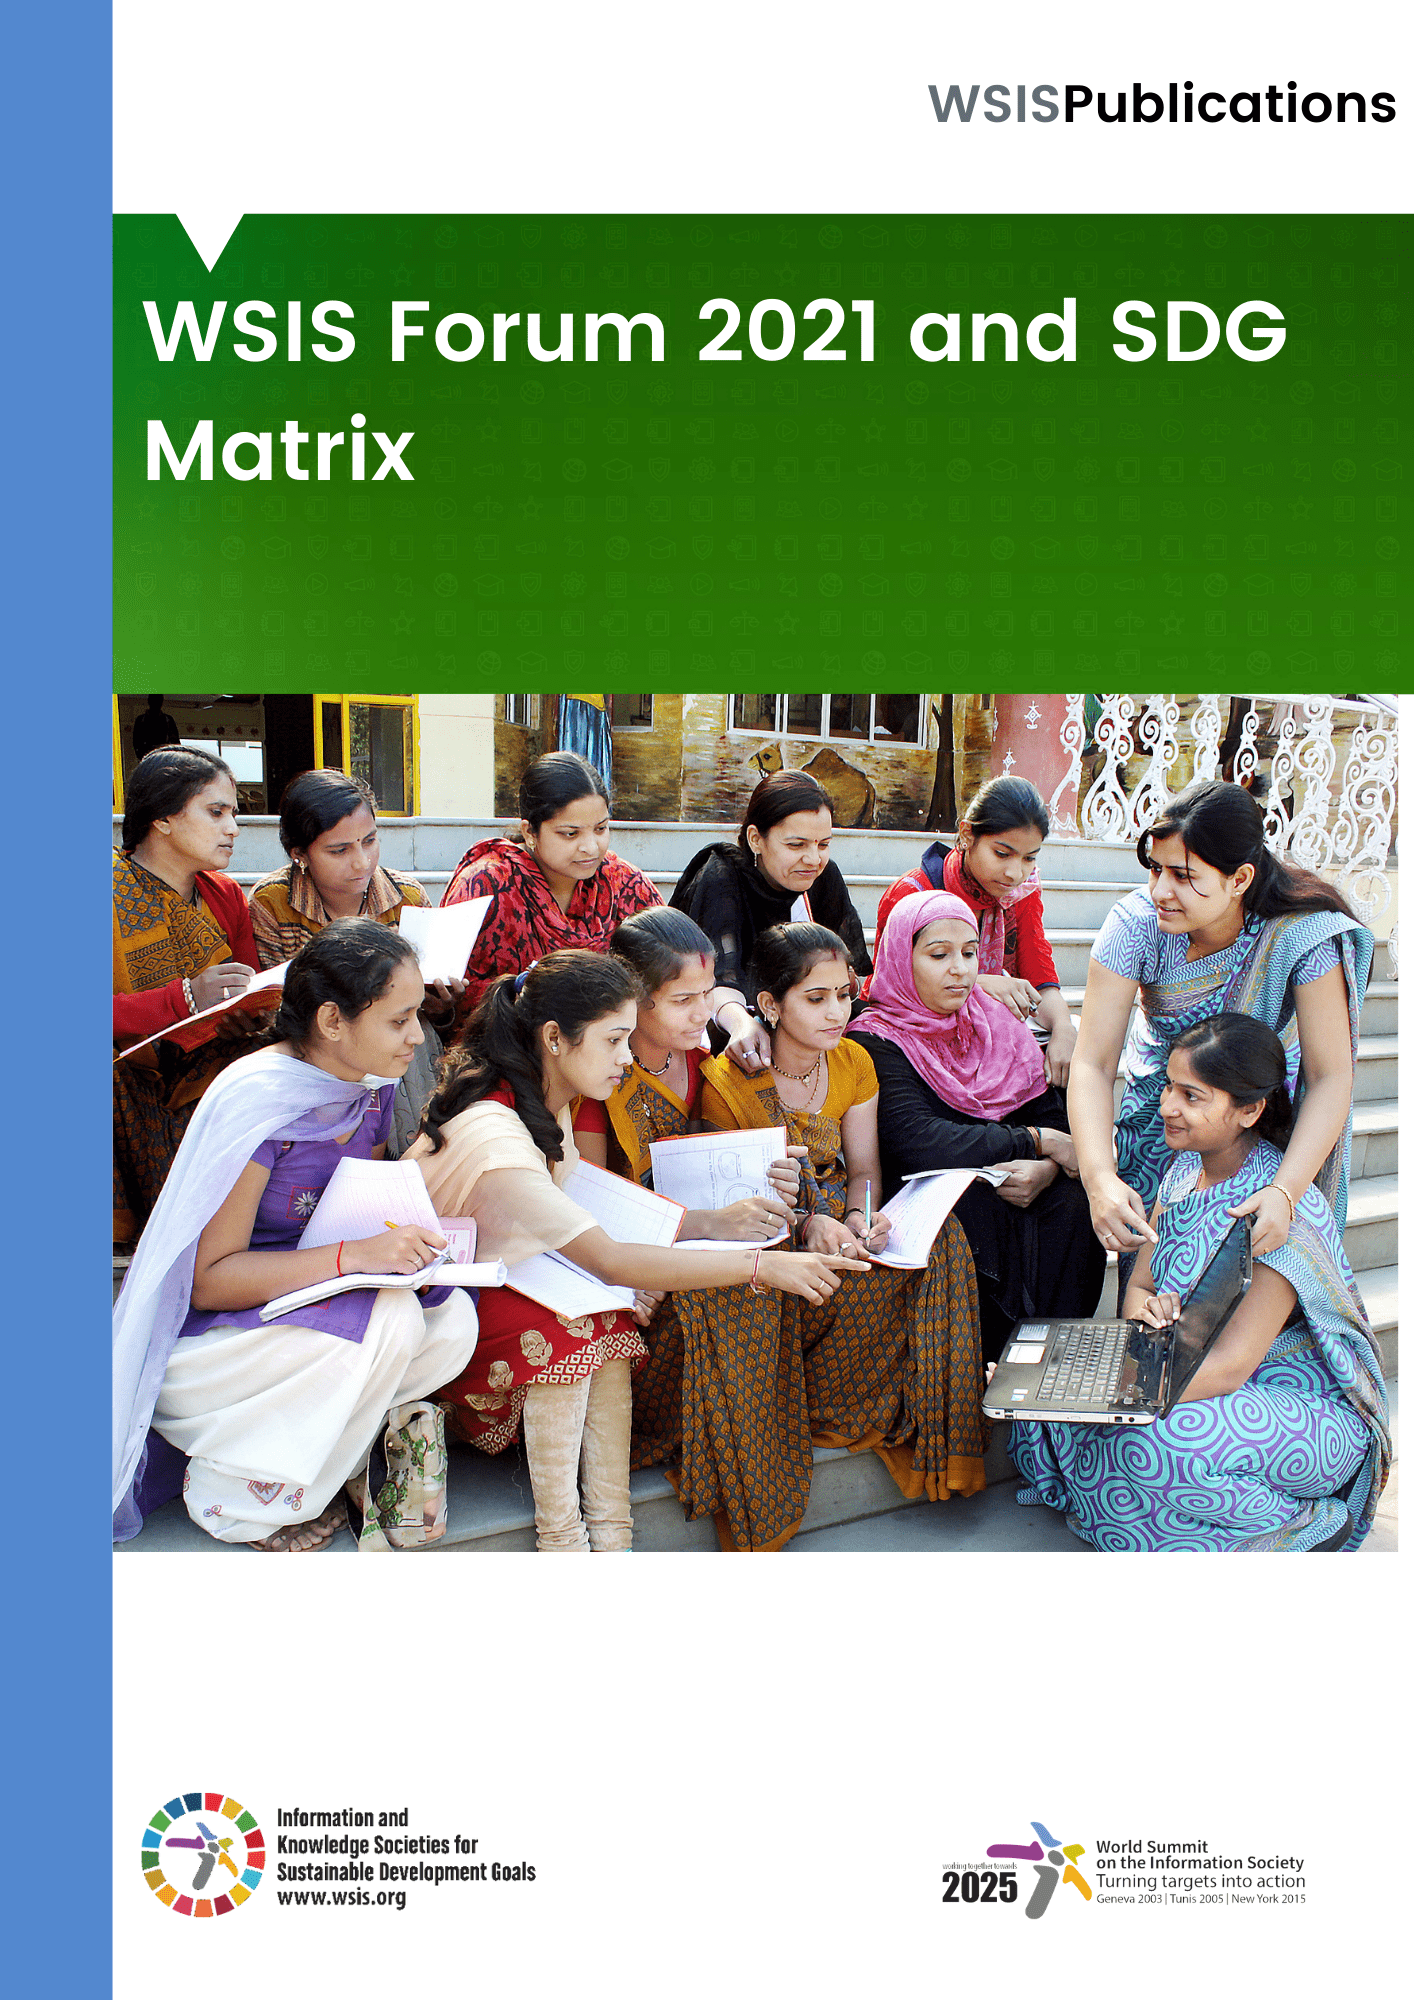 WSIS Forum 2021 and SDG Matrix